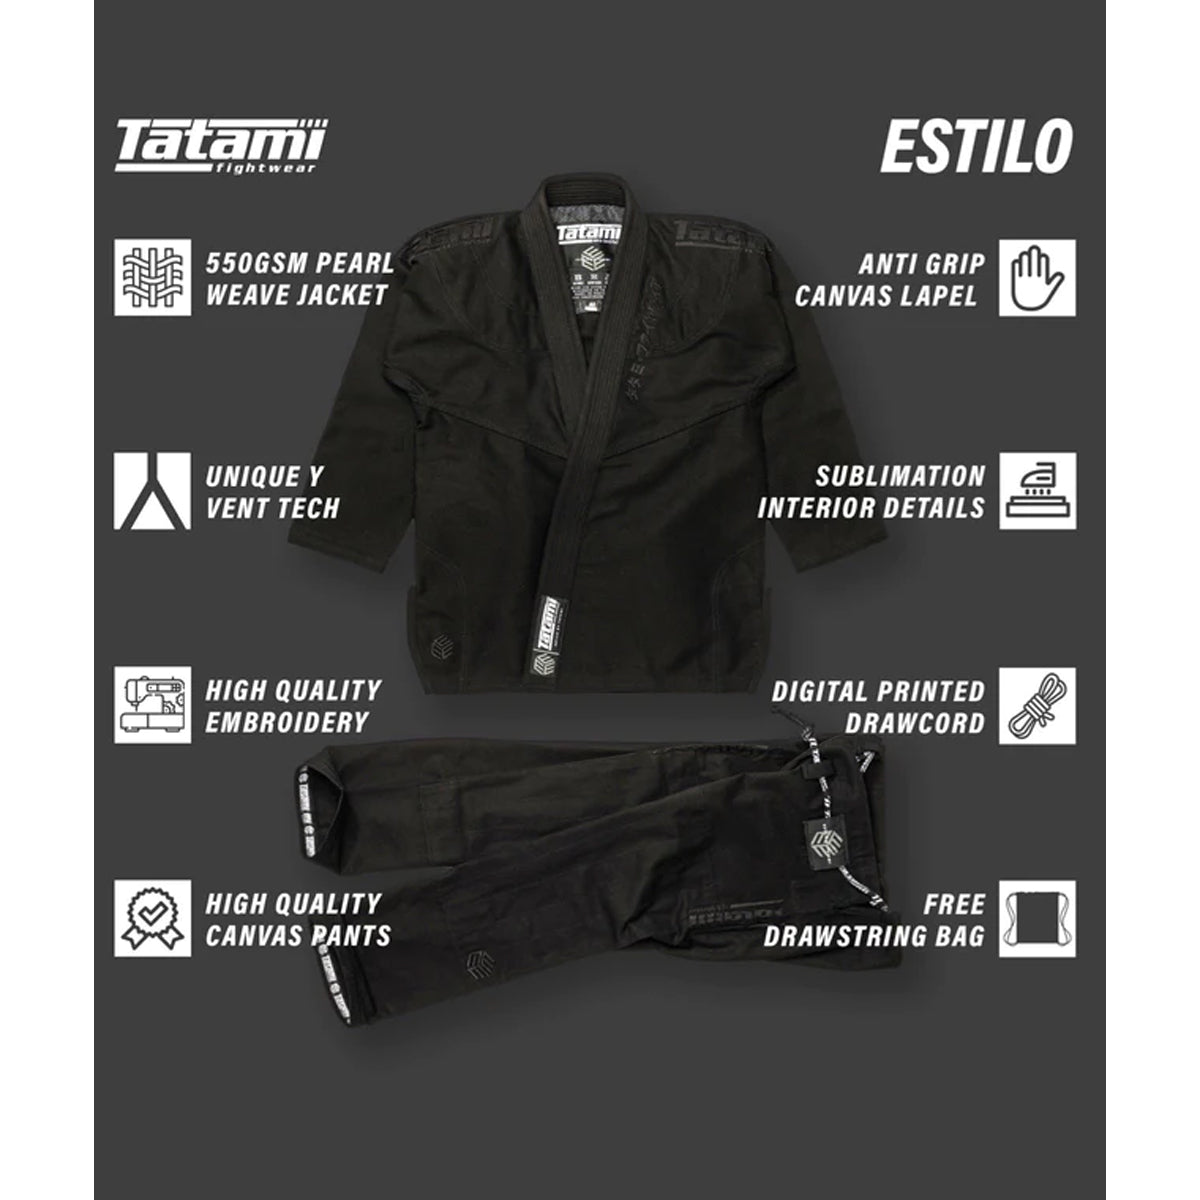 Tatami Fightwear Estilo Black Label BJJ Gi - Black/Black Tatami Fightwear